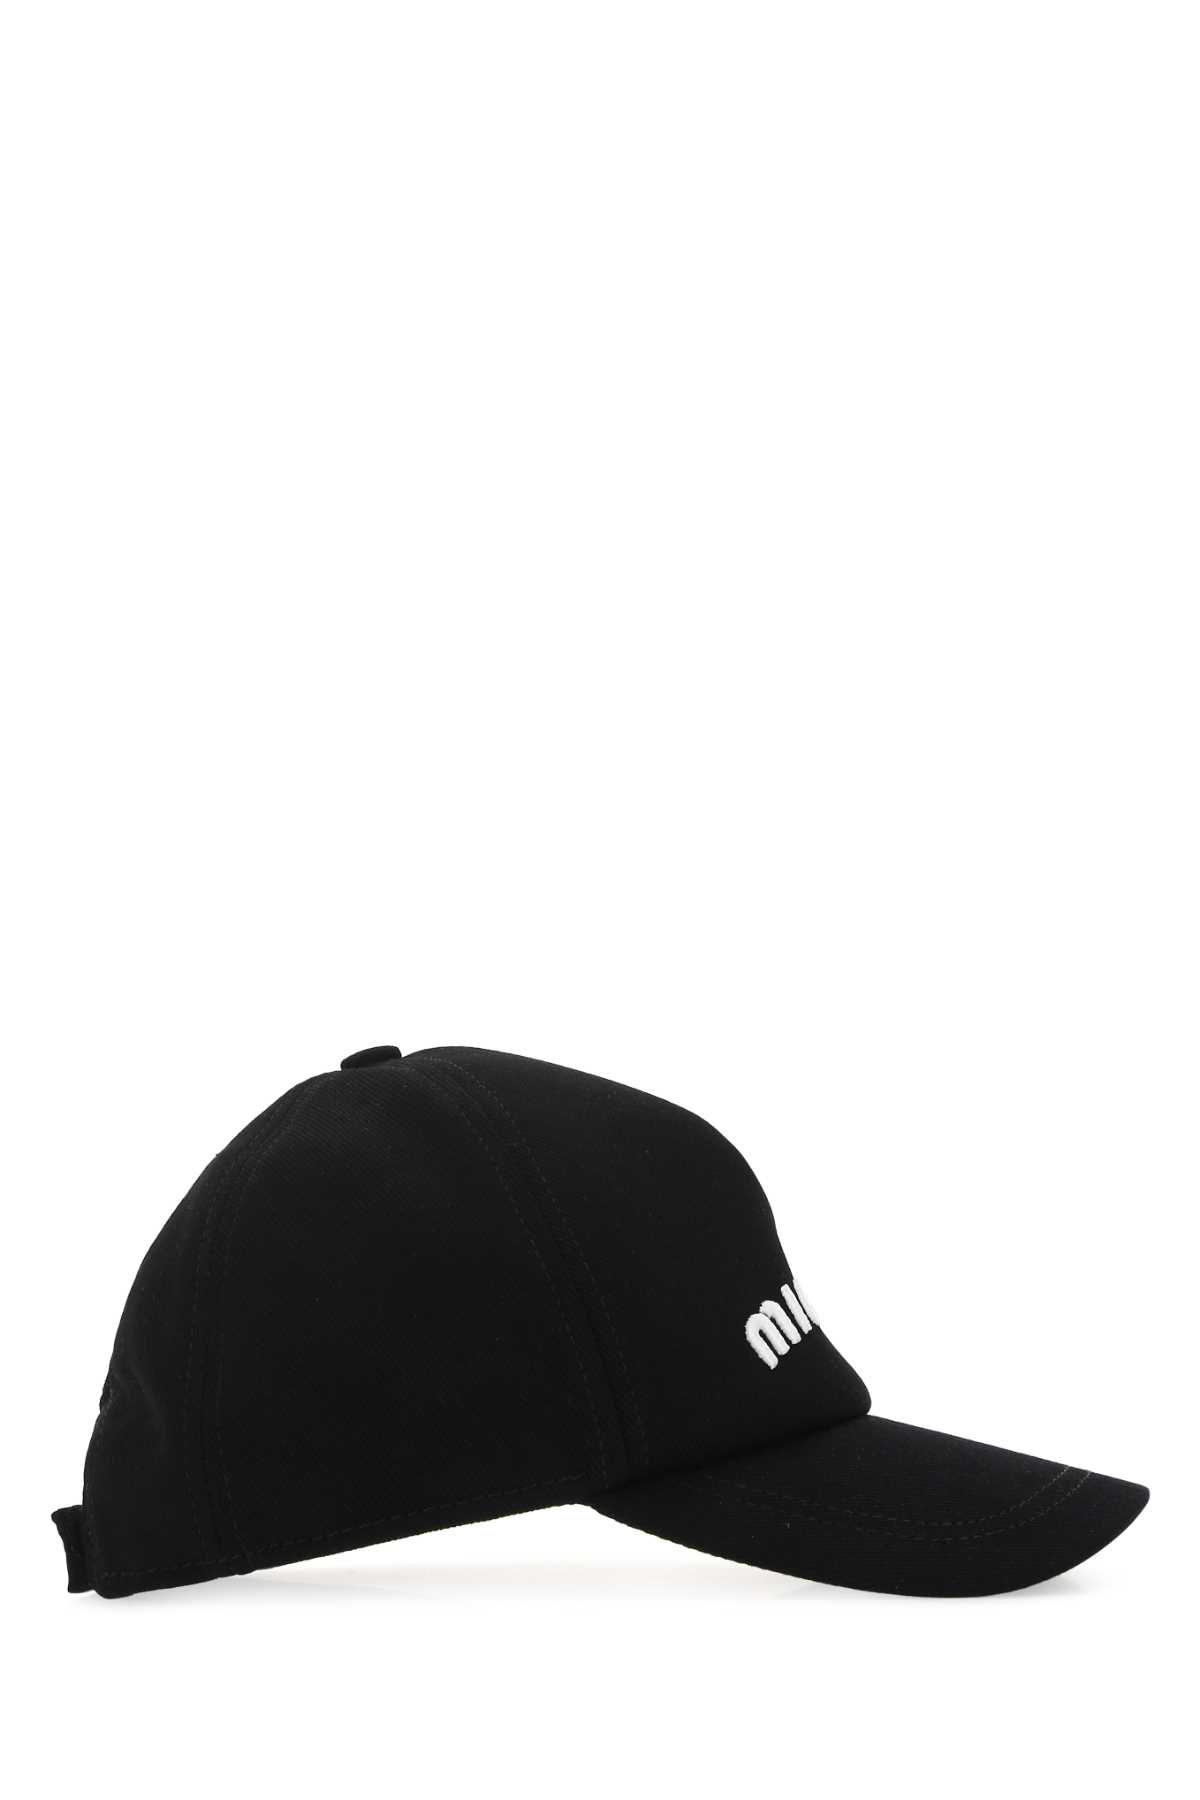 Shop Miu Miu Black Cotton Baseball Cap In F0967